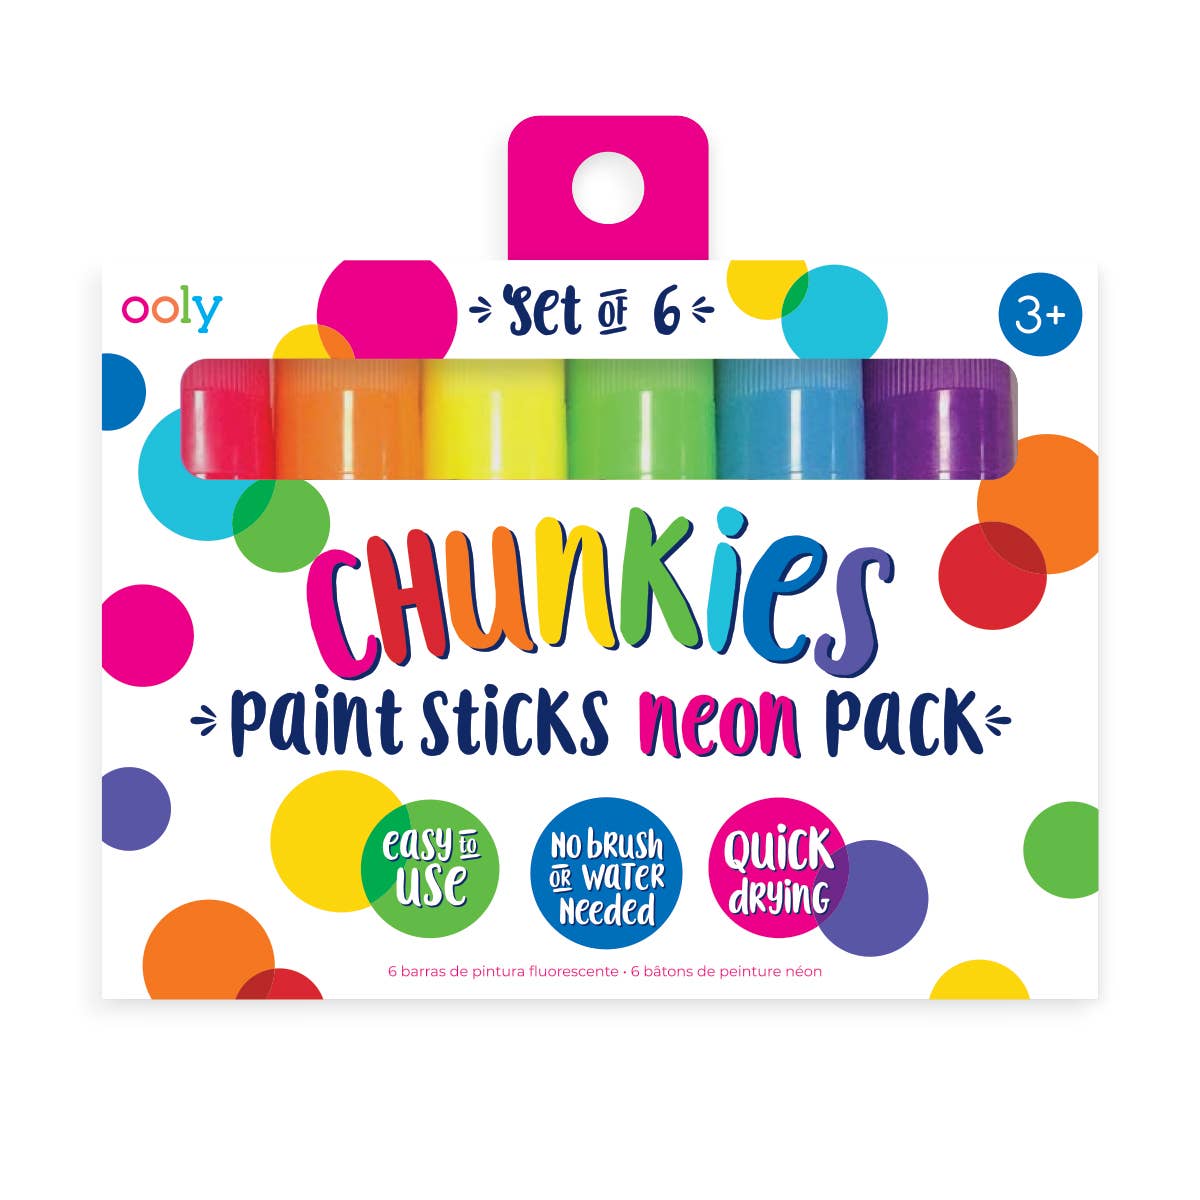 Chunkies Paint Sticks- Neon